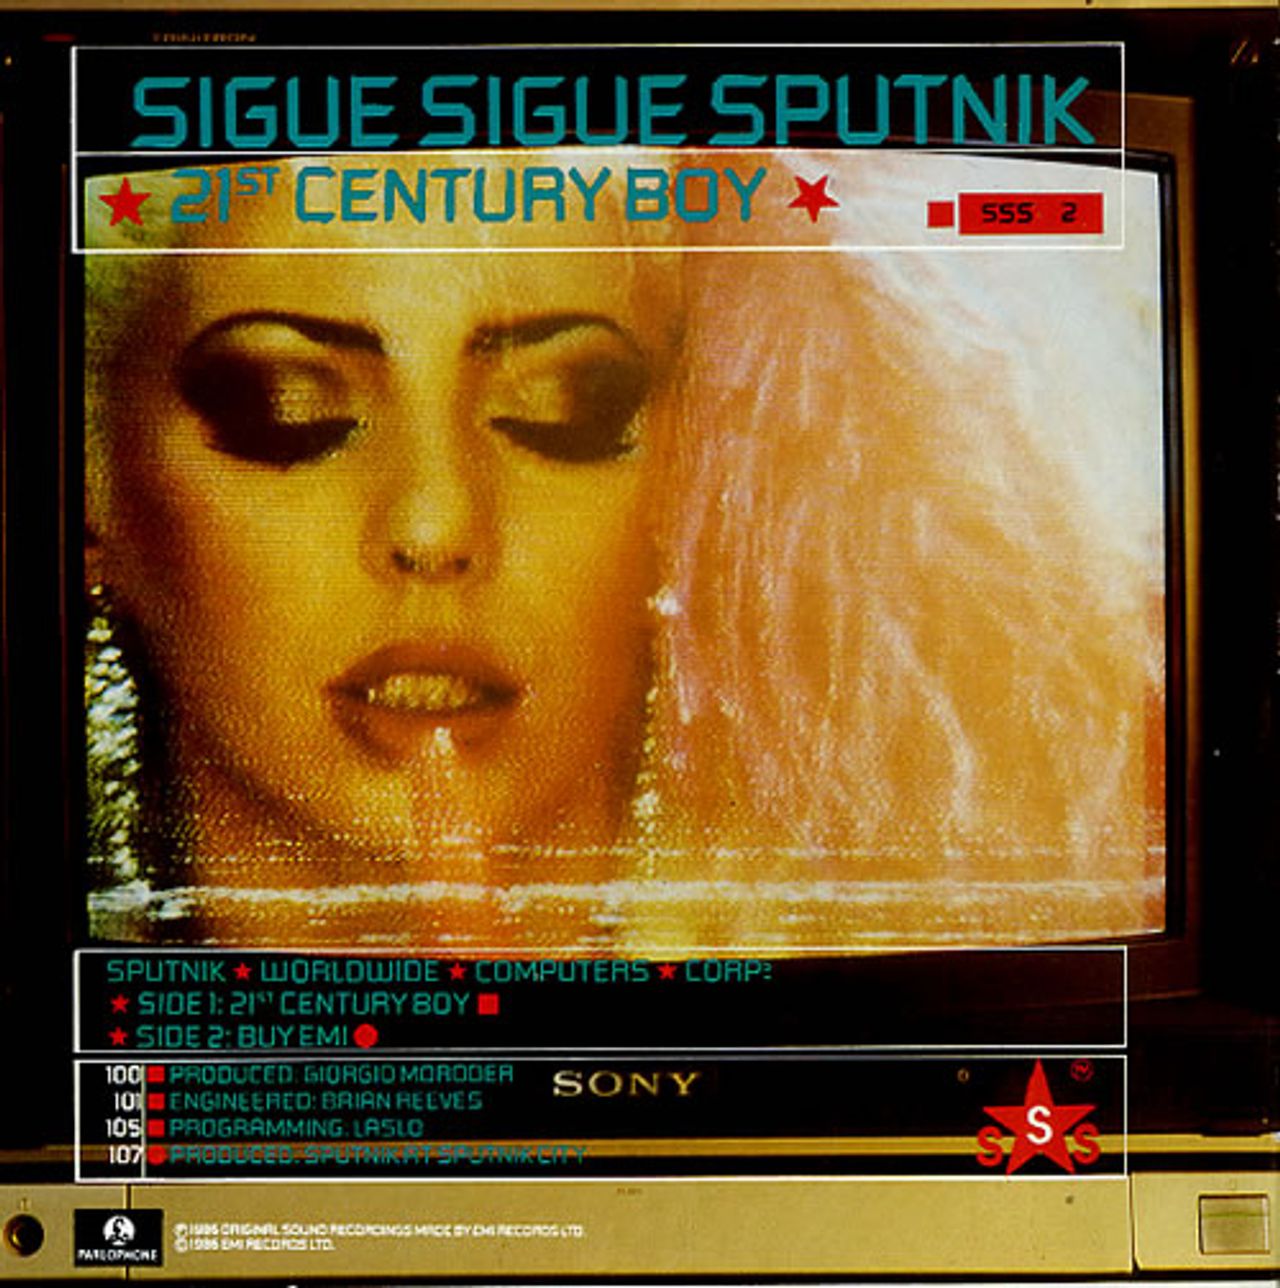 Sigue Sigue Sputnik 21st Century Boy - Poster Sleeve UK 7